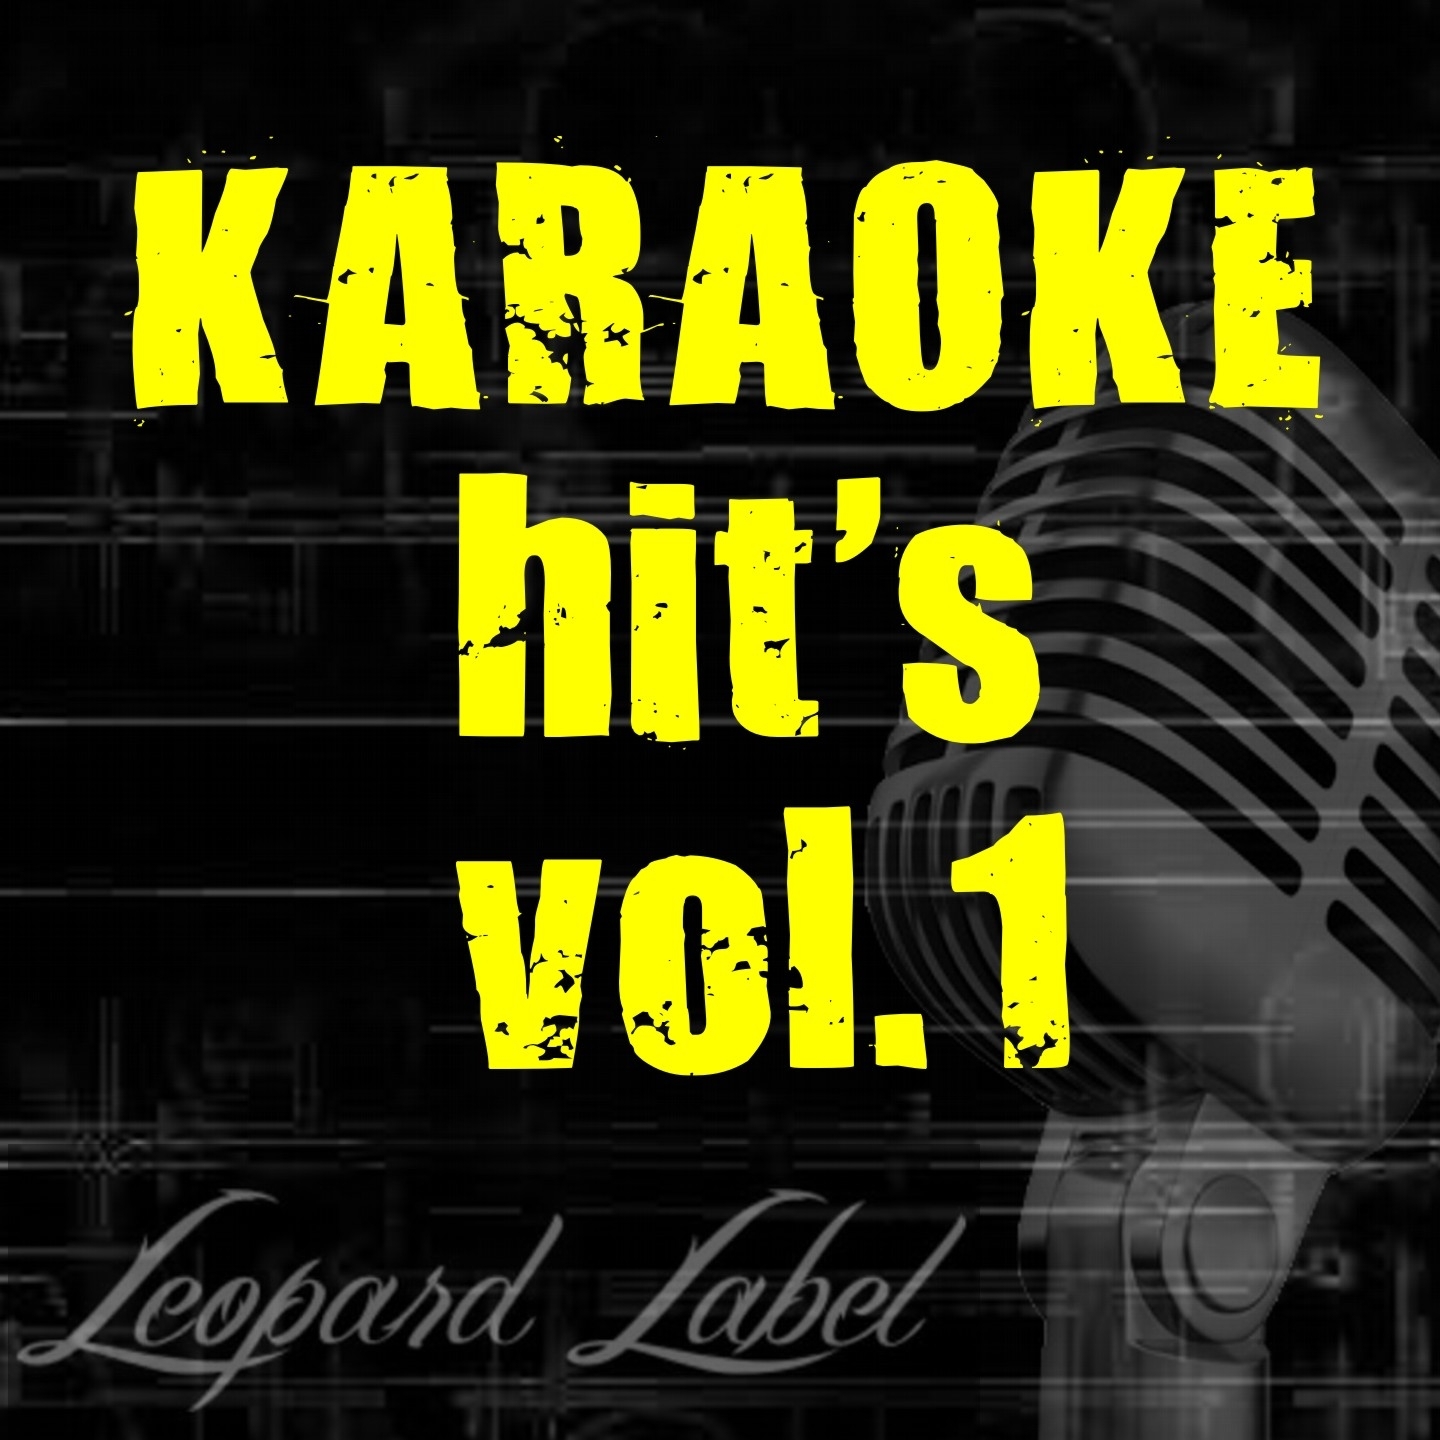 Karaoke Hits, Vol. 1